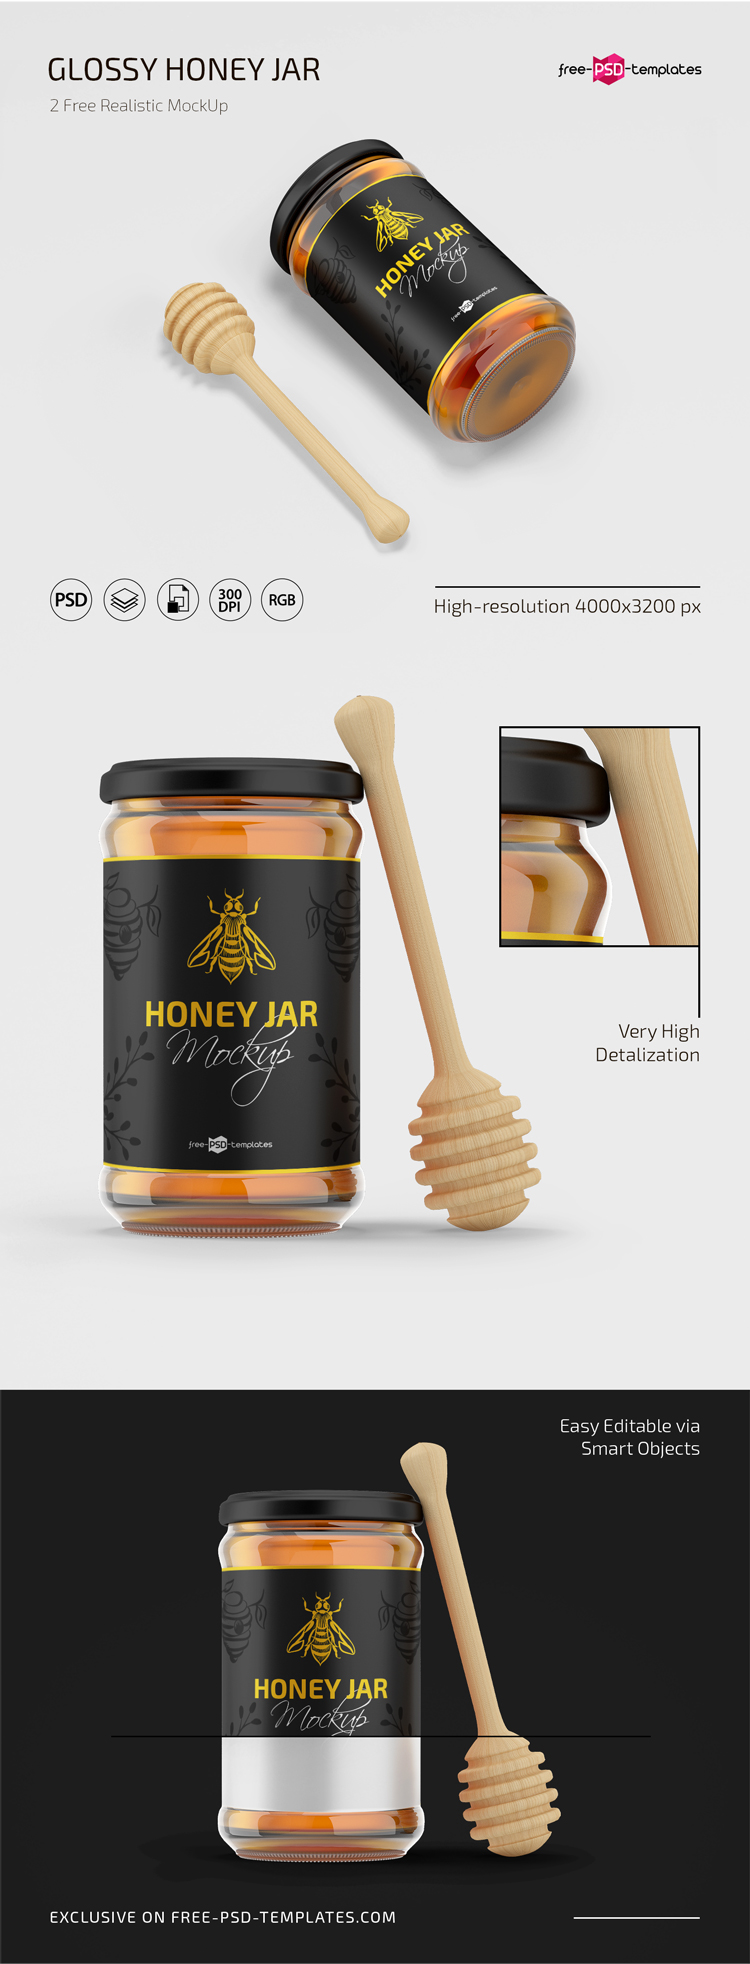 Download Free Psd Honey Jar Mockup Set Free Psd Templates PSD Mockup Templates